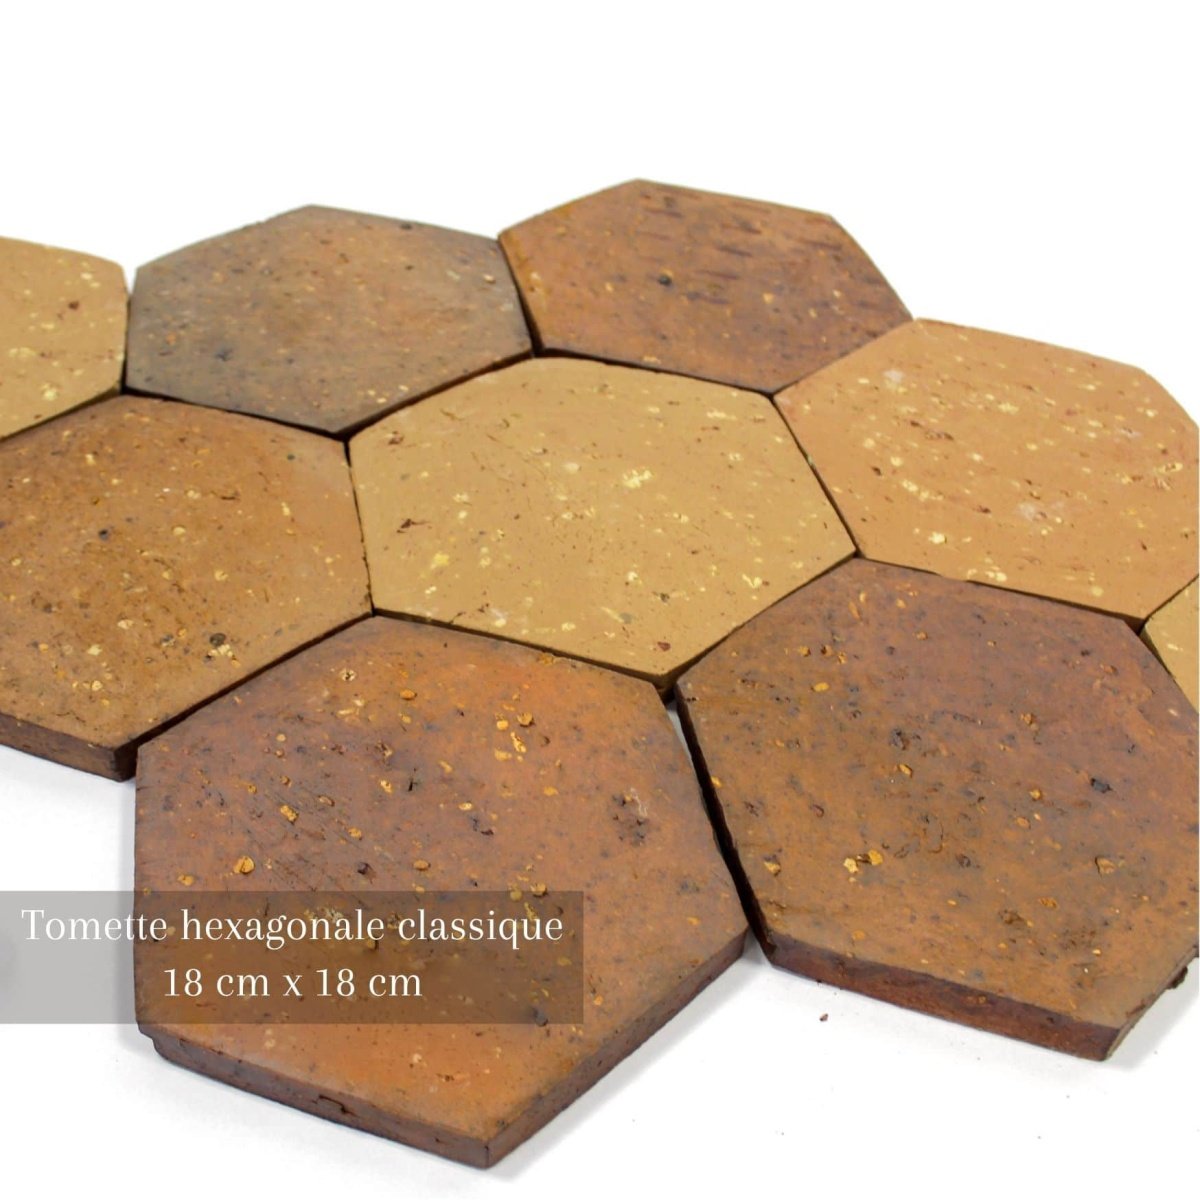 tomette hexagonale classique 4